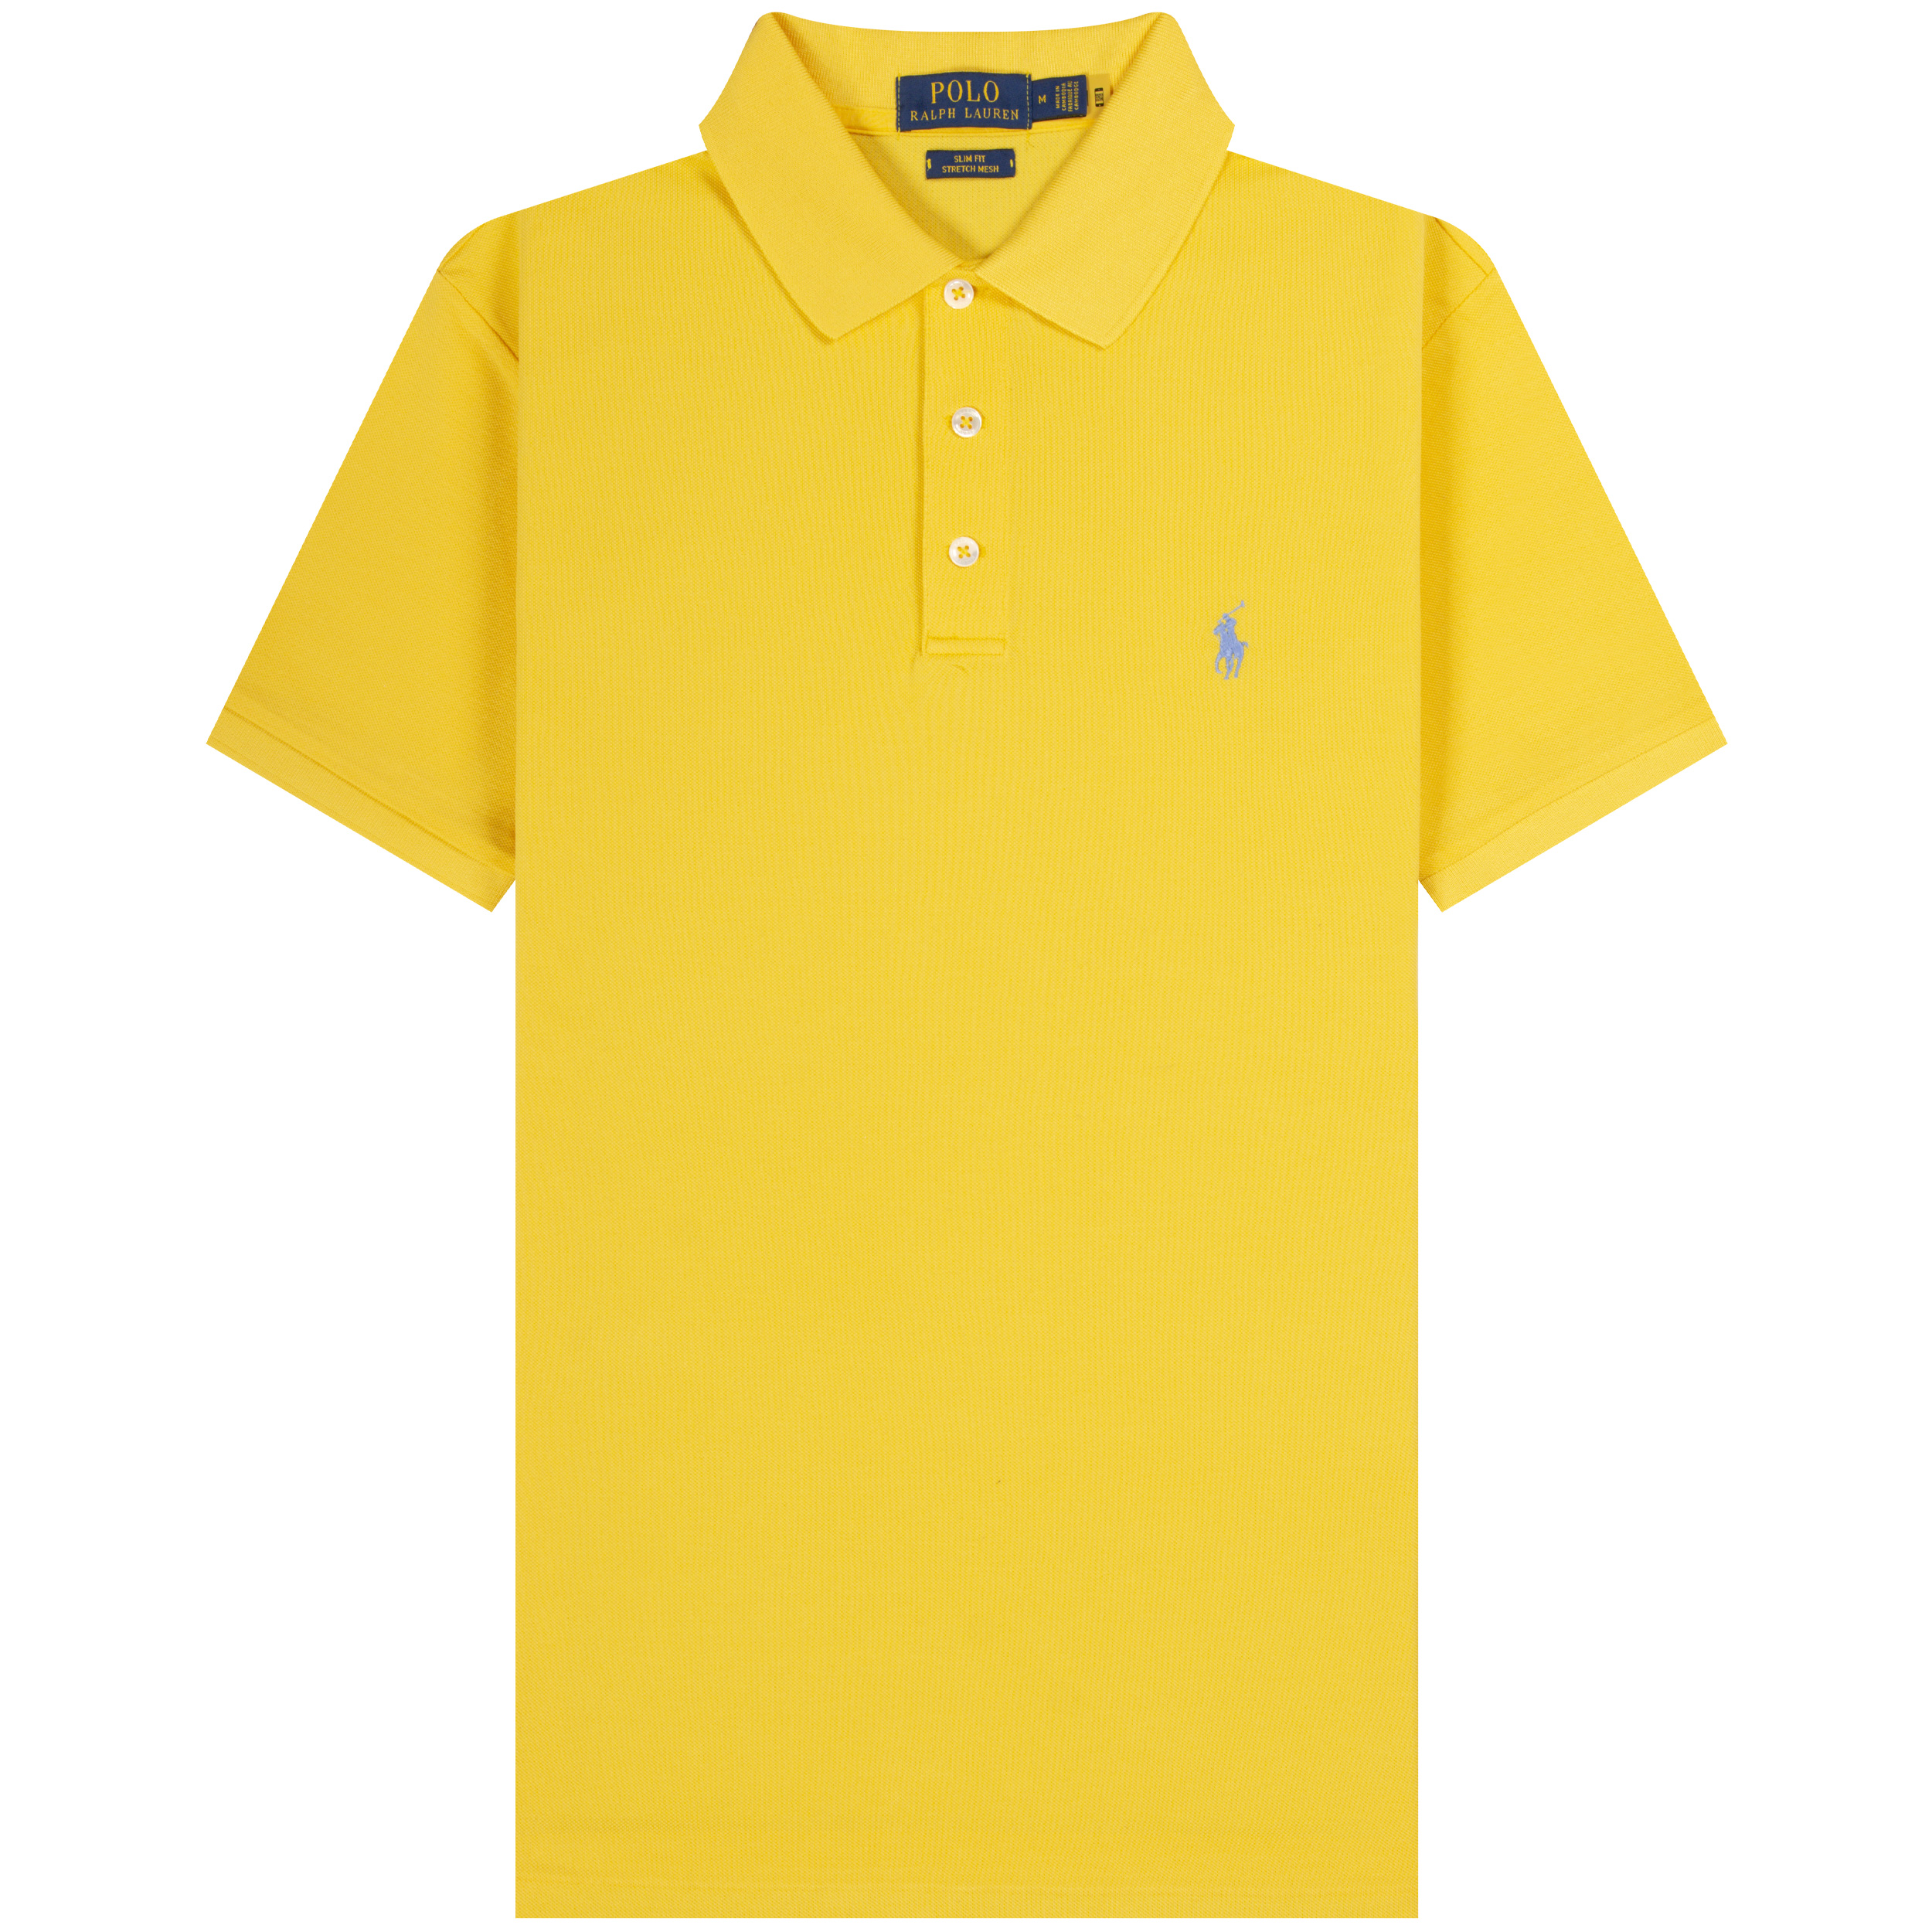 Polo Ralph Lauren ’Stretch Mesh’ Slim Fit Polo Yellow